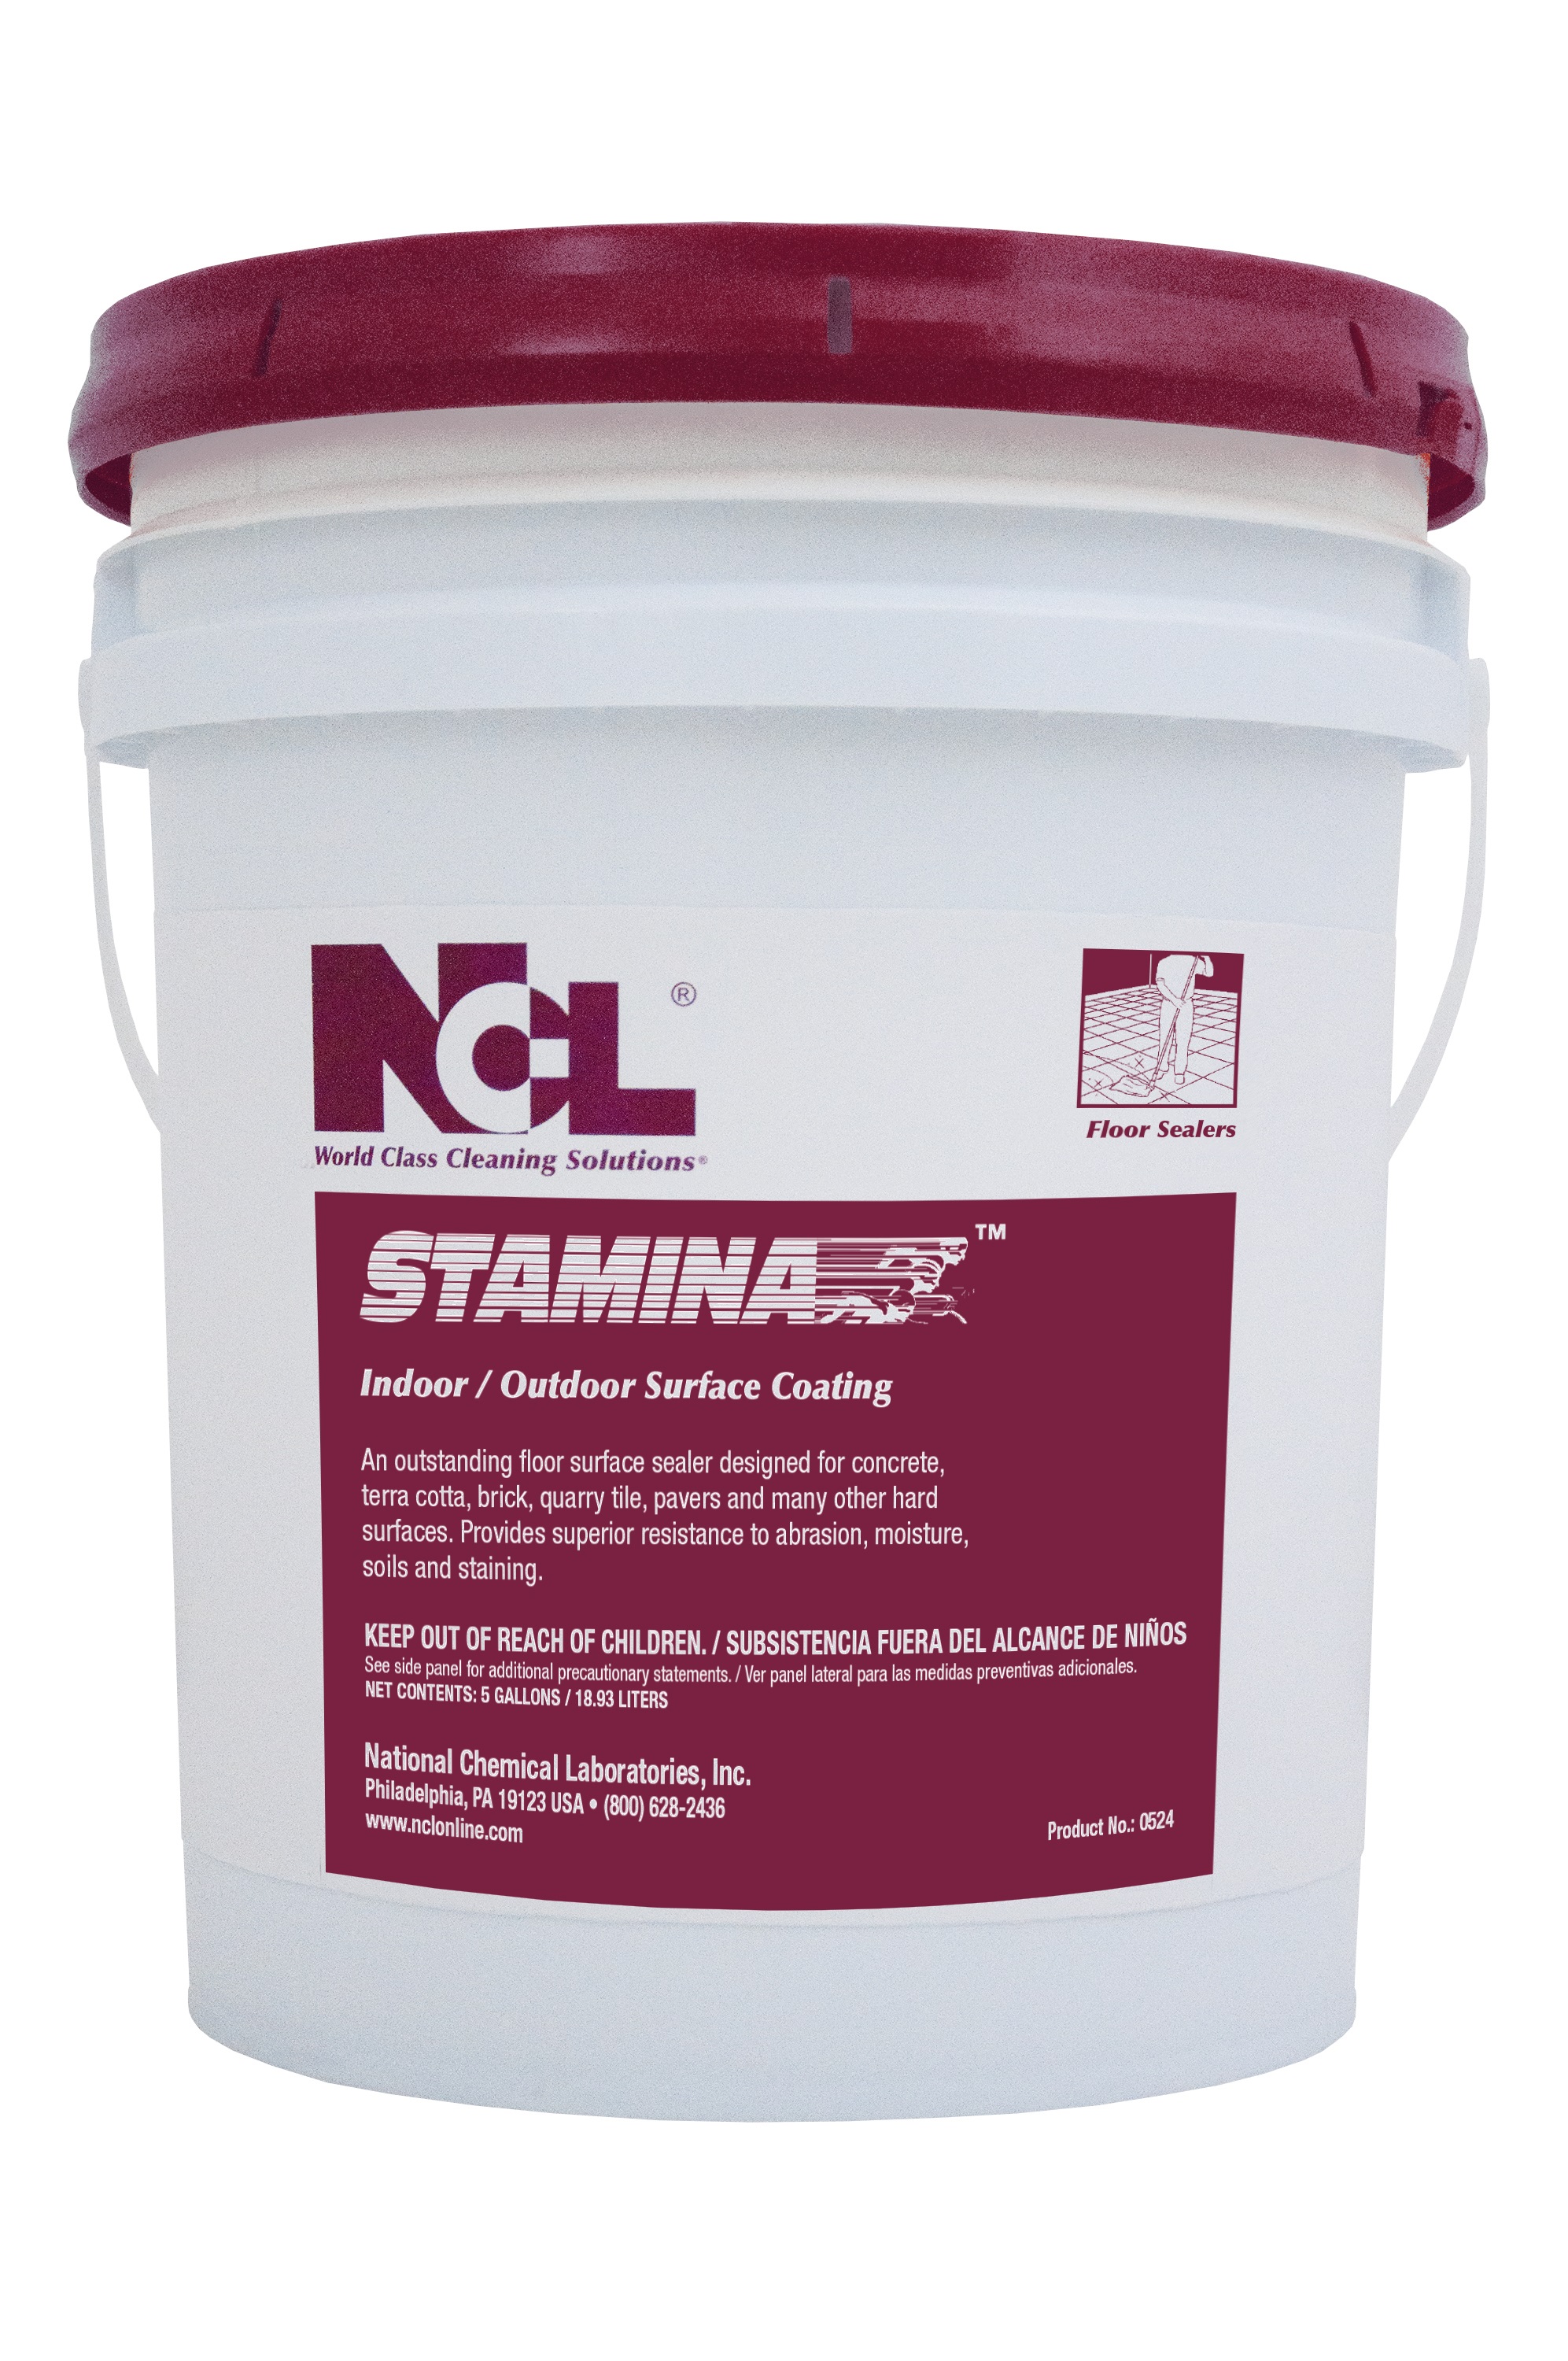 NCL Stamina Indoor/Outdoor
Surface Coating - (5gal)